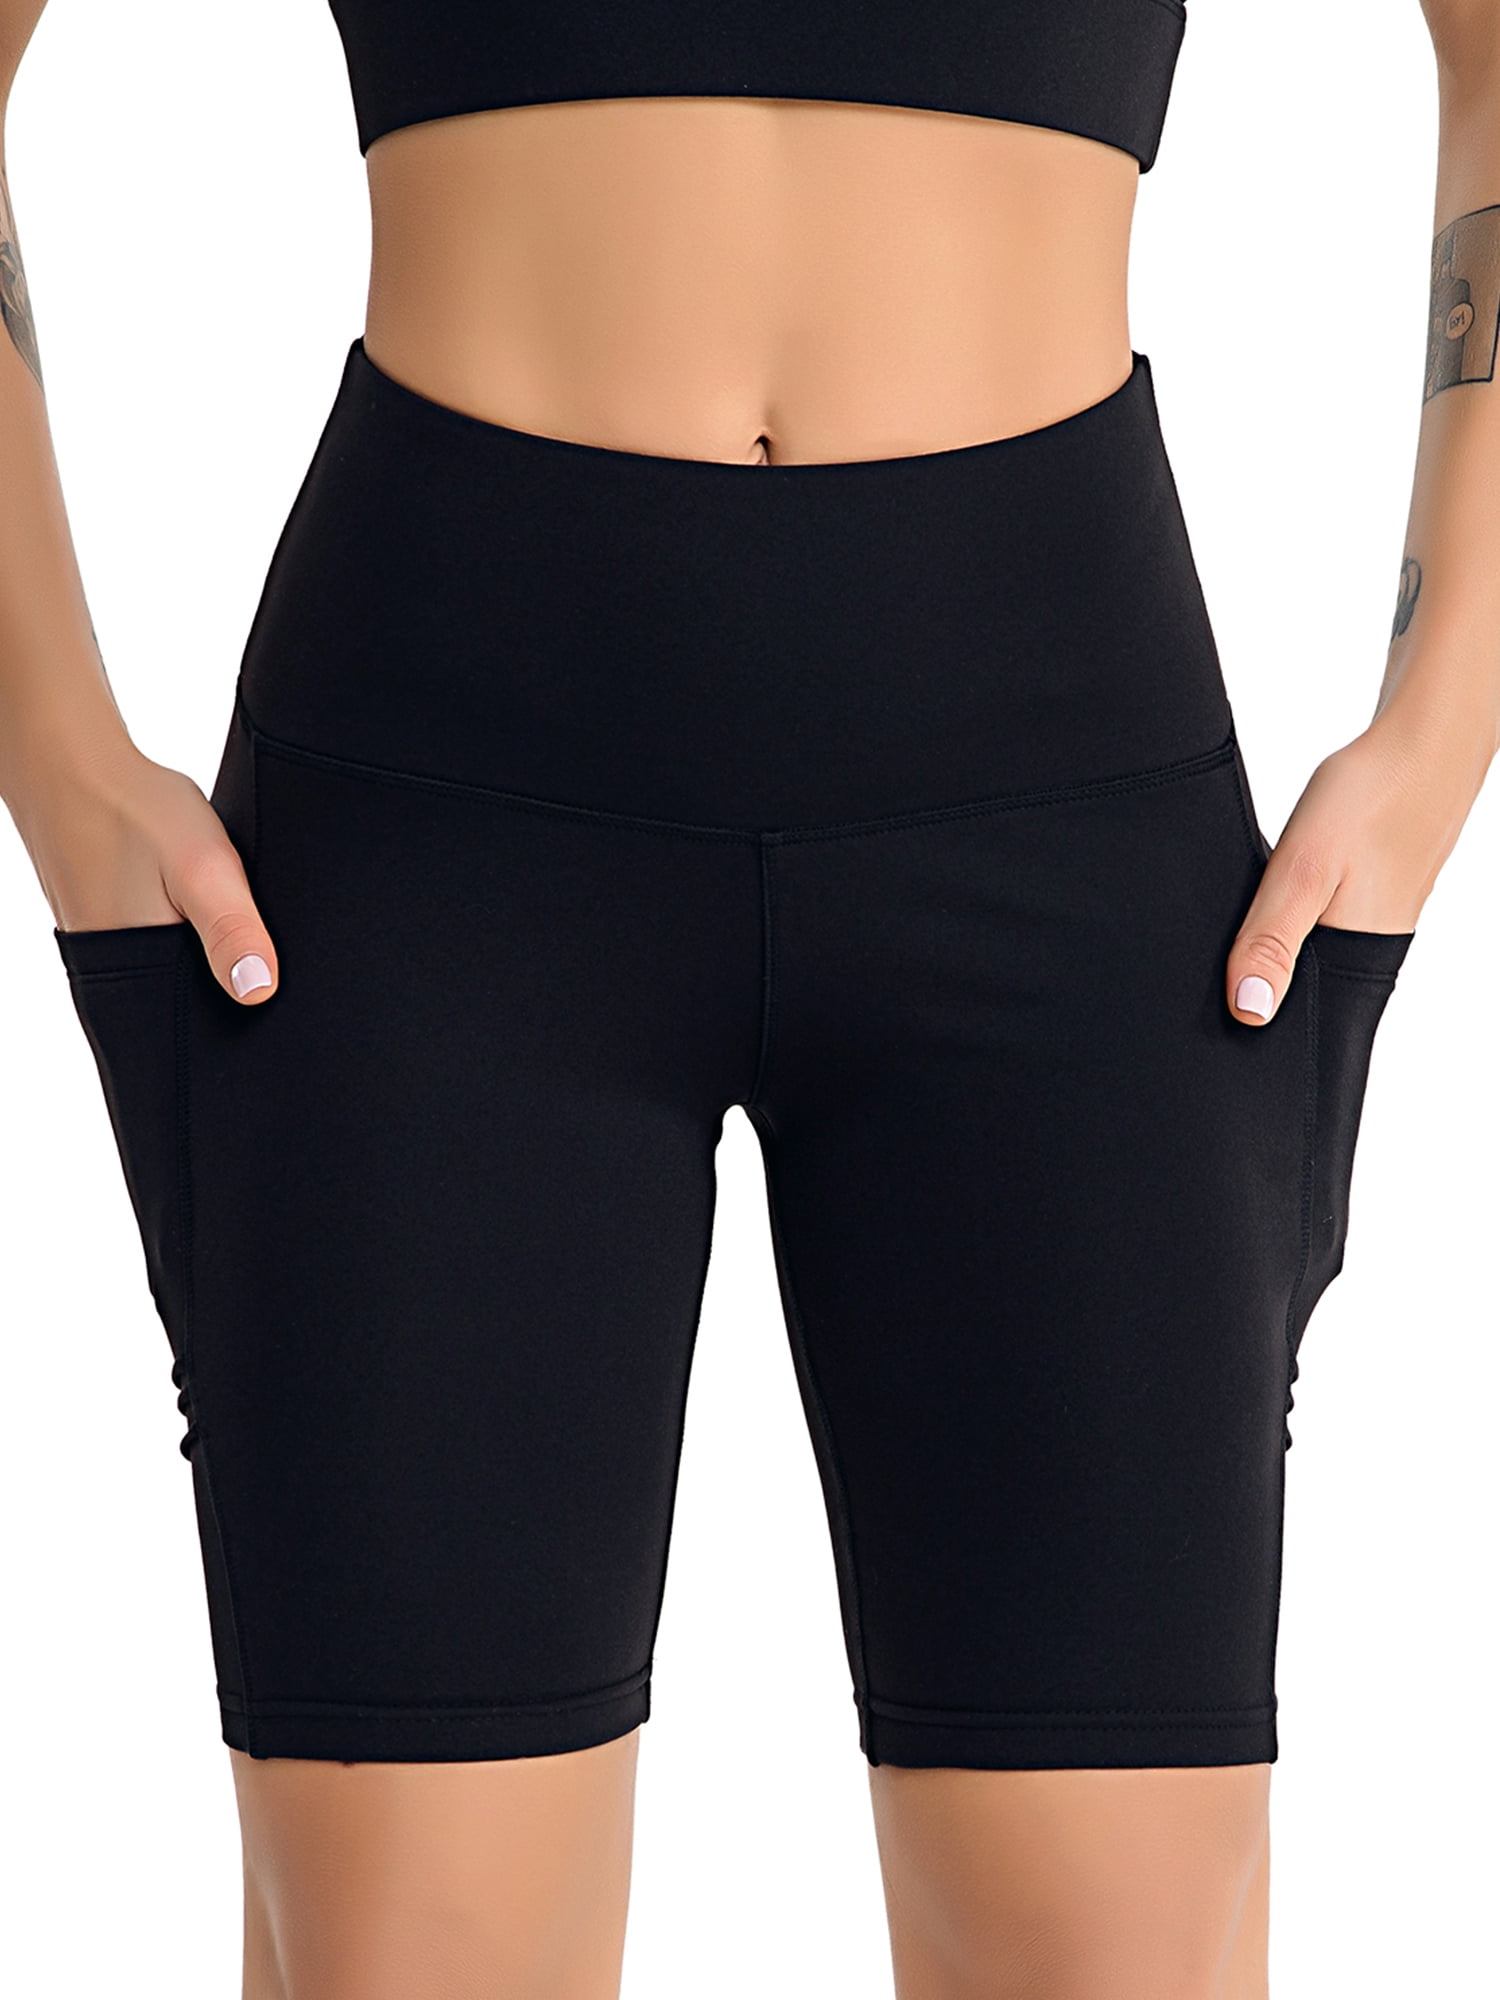 Dual Pocket High Waist Workout Shorts-Tummy Control Yoga Gym Running Pants,Non See-Through Soft Legging